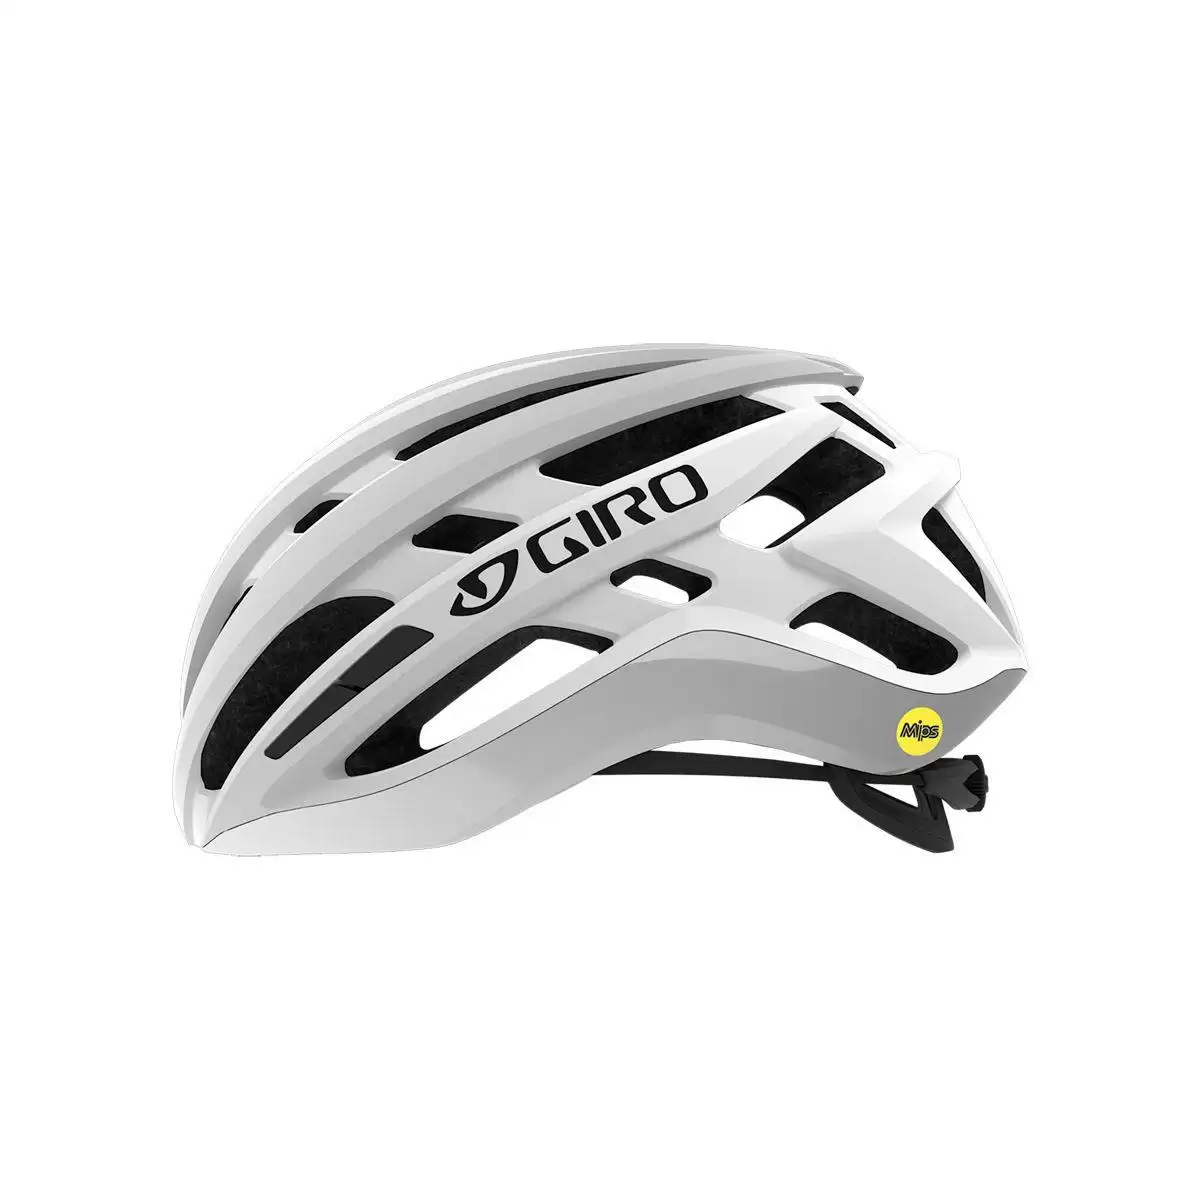 Helmet Agilis MIPS White 2021 Size S (51-55cm) #1